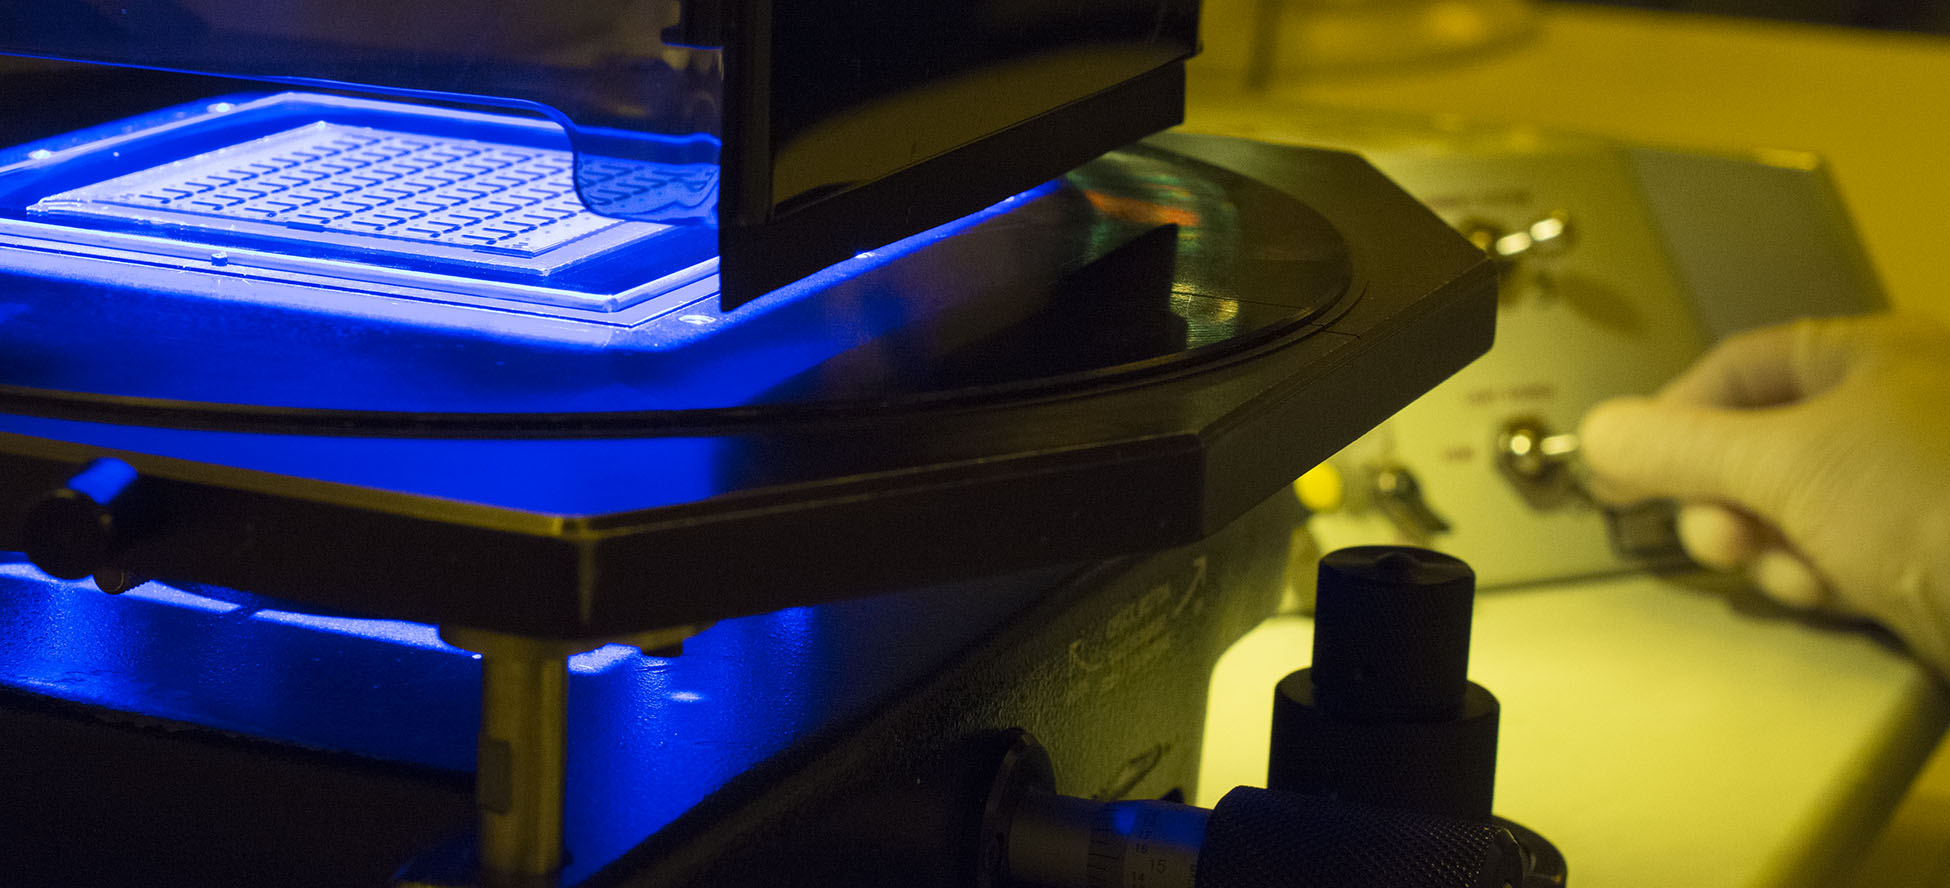 Exposure of photoresist during thin film fabrication